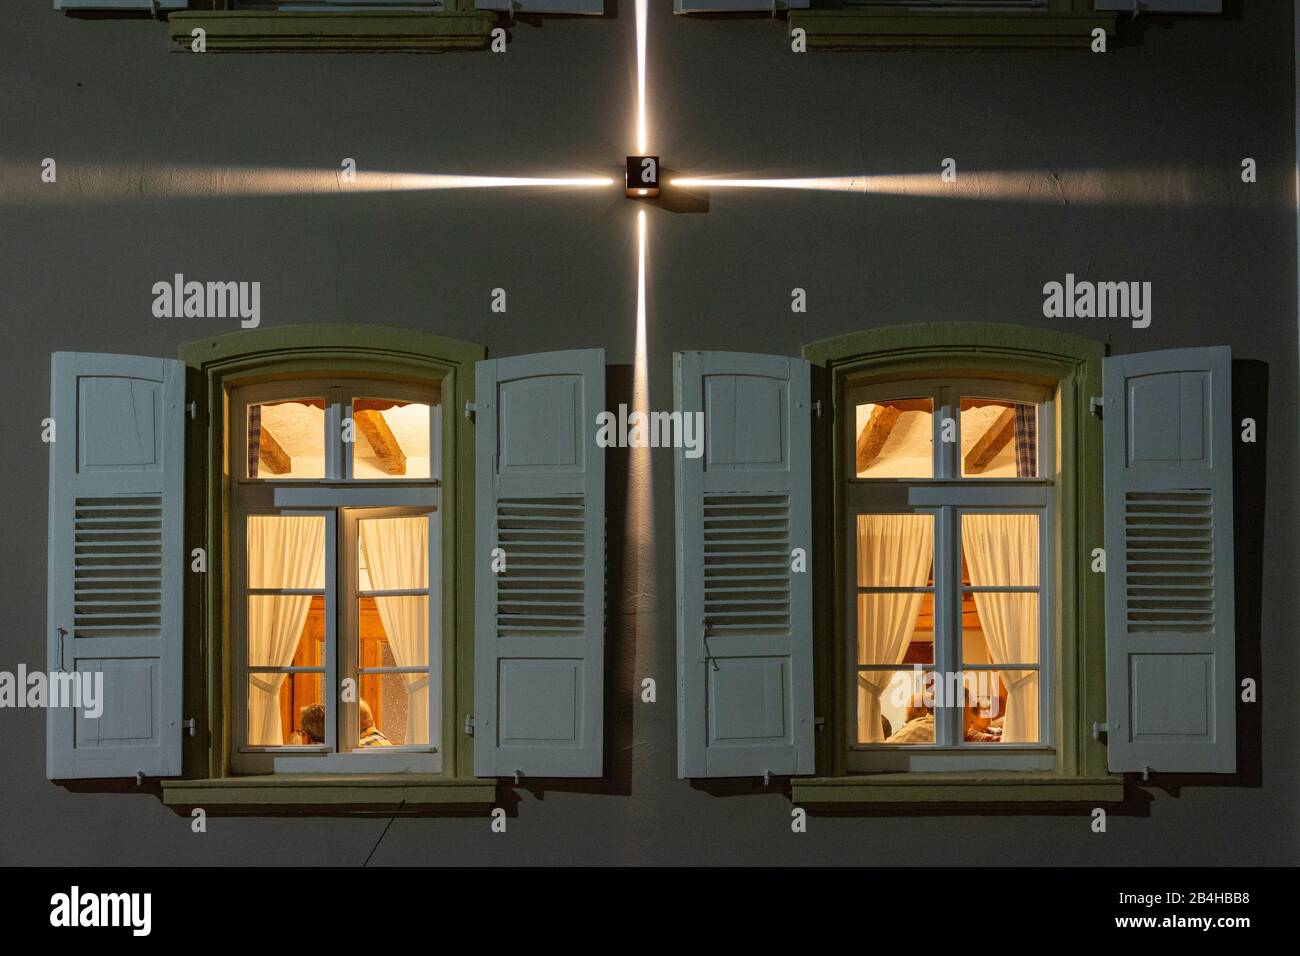 Germania, Rheinlandpfalz, Schweigen-Rechtenbach, finestre illuminate di un ristorante. Foto Stock